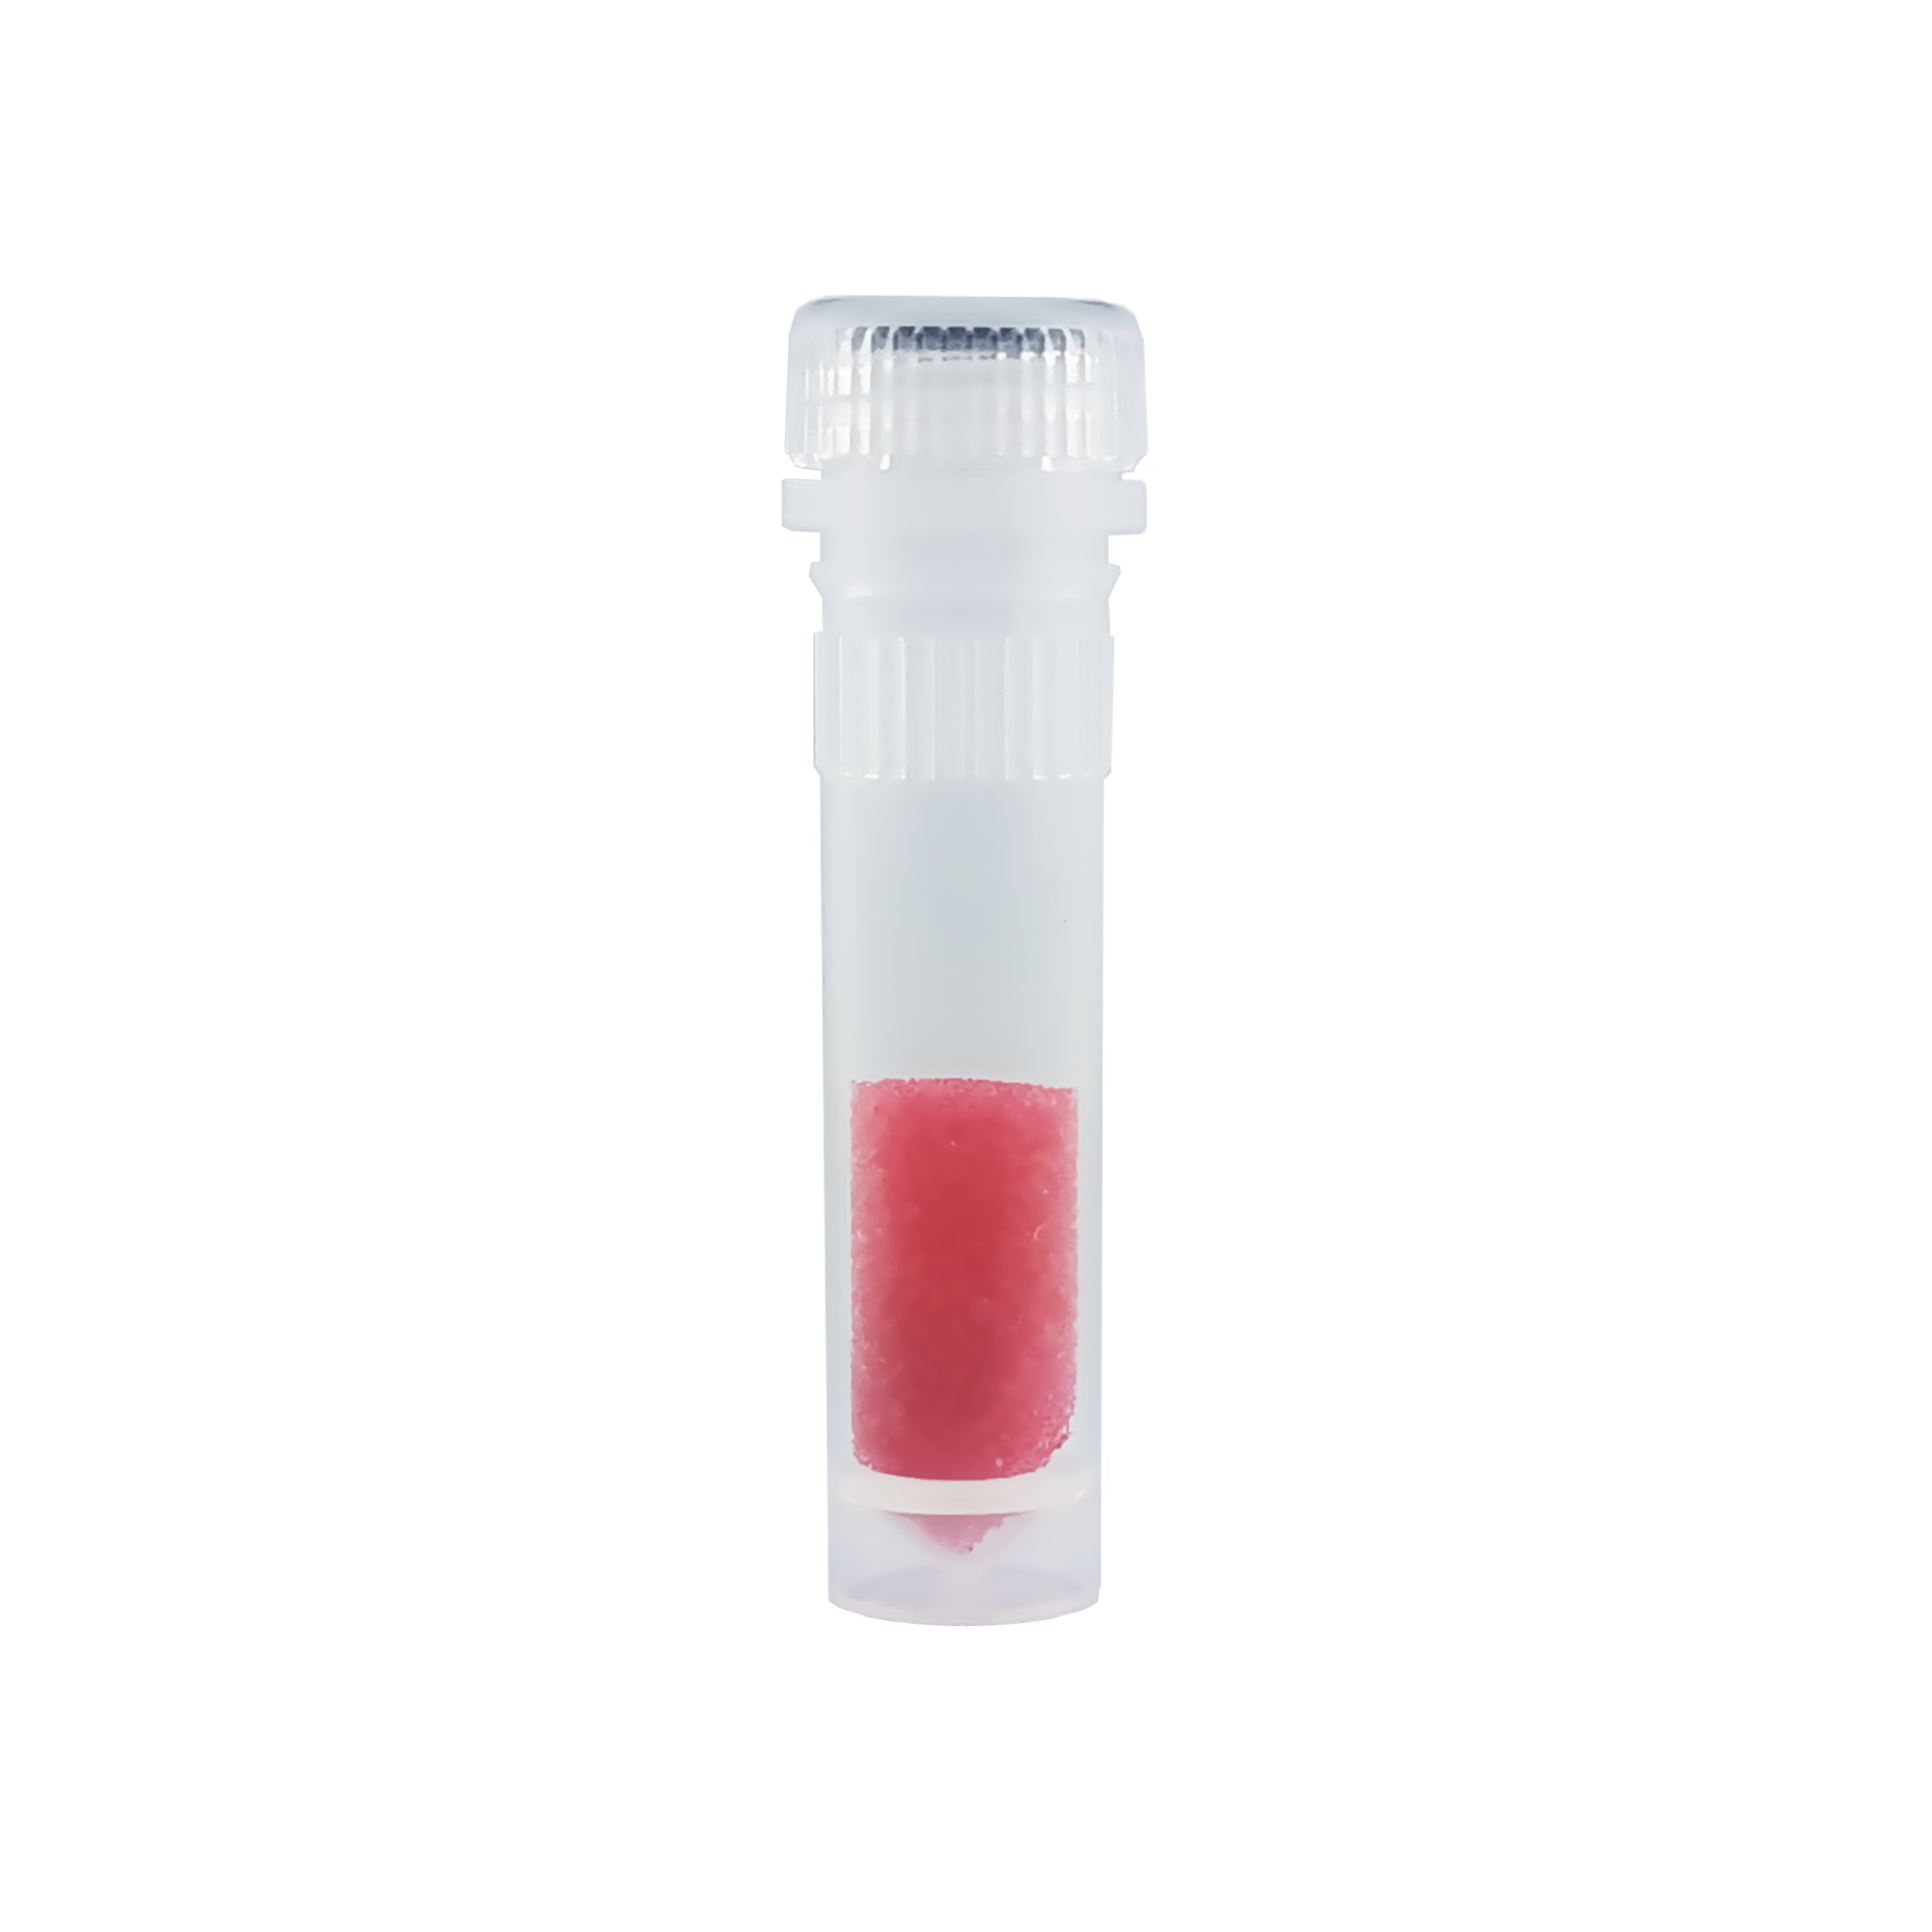 pluriMate - 2 ml centrifuge tube